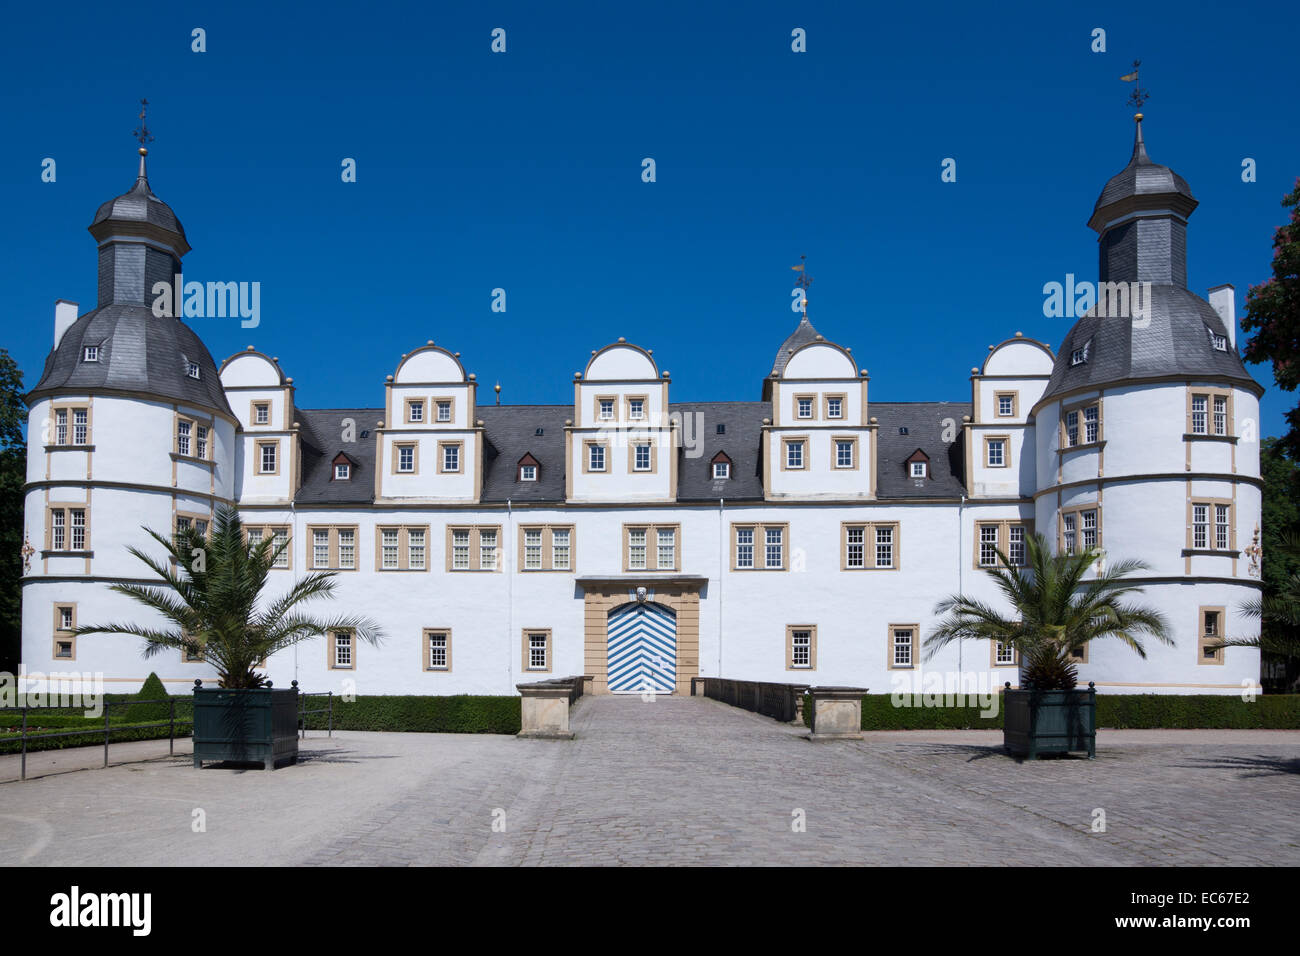 Schloss Neuhaus palace, Paderborn, Ostwestfalen Lippe region, North Rhine Westphalia, Germany, Europe Stock Photo